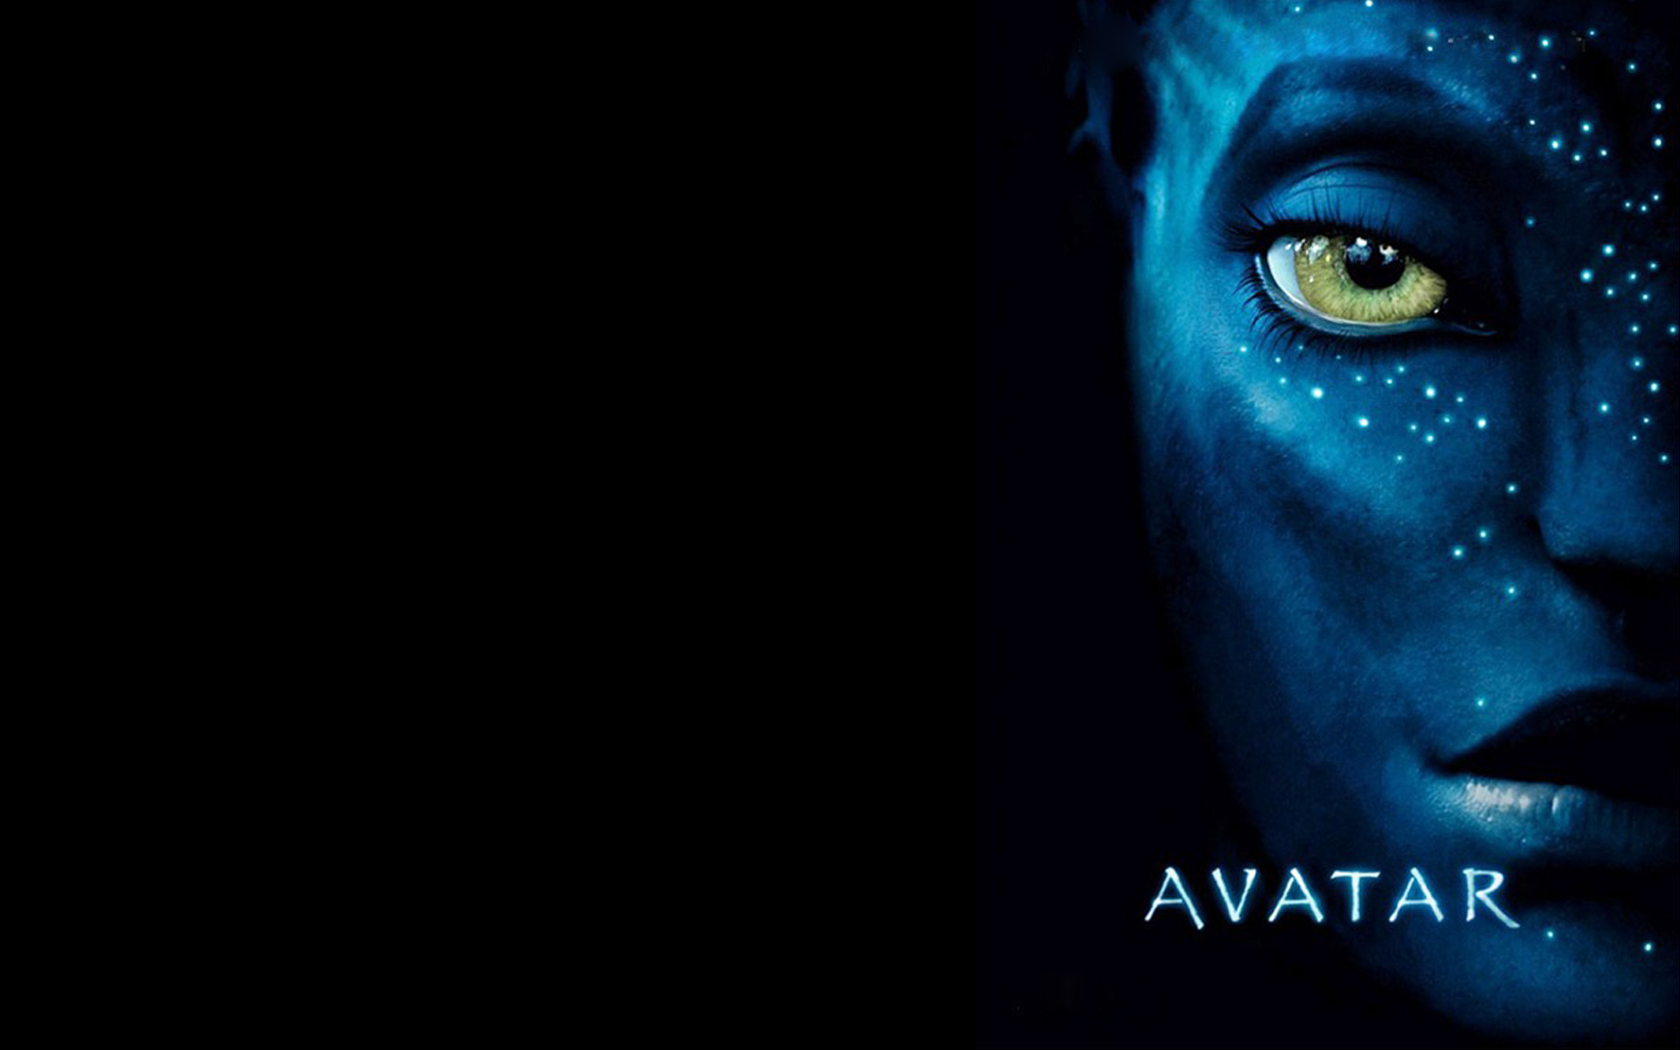 Avatar Backgrounds Avatar Themes